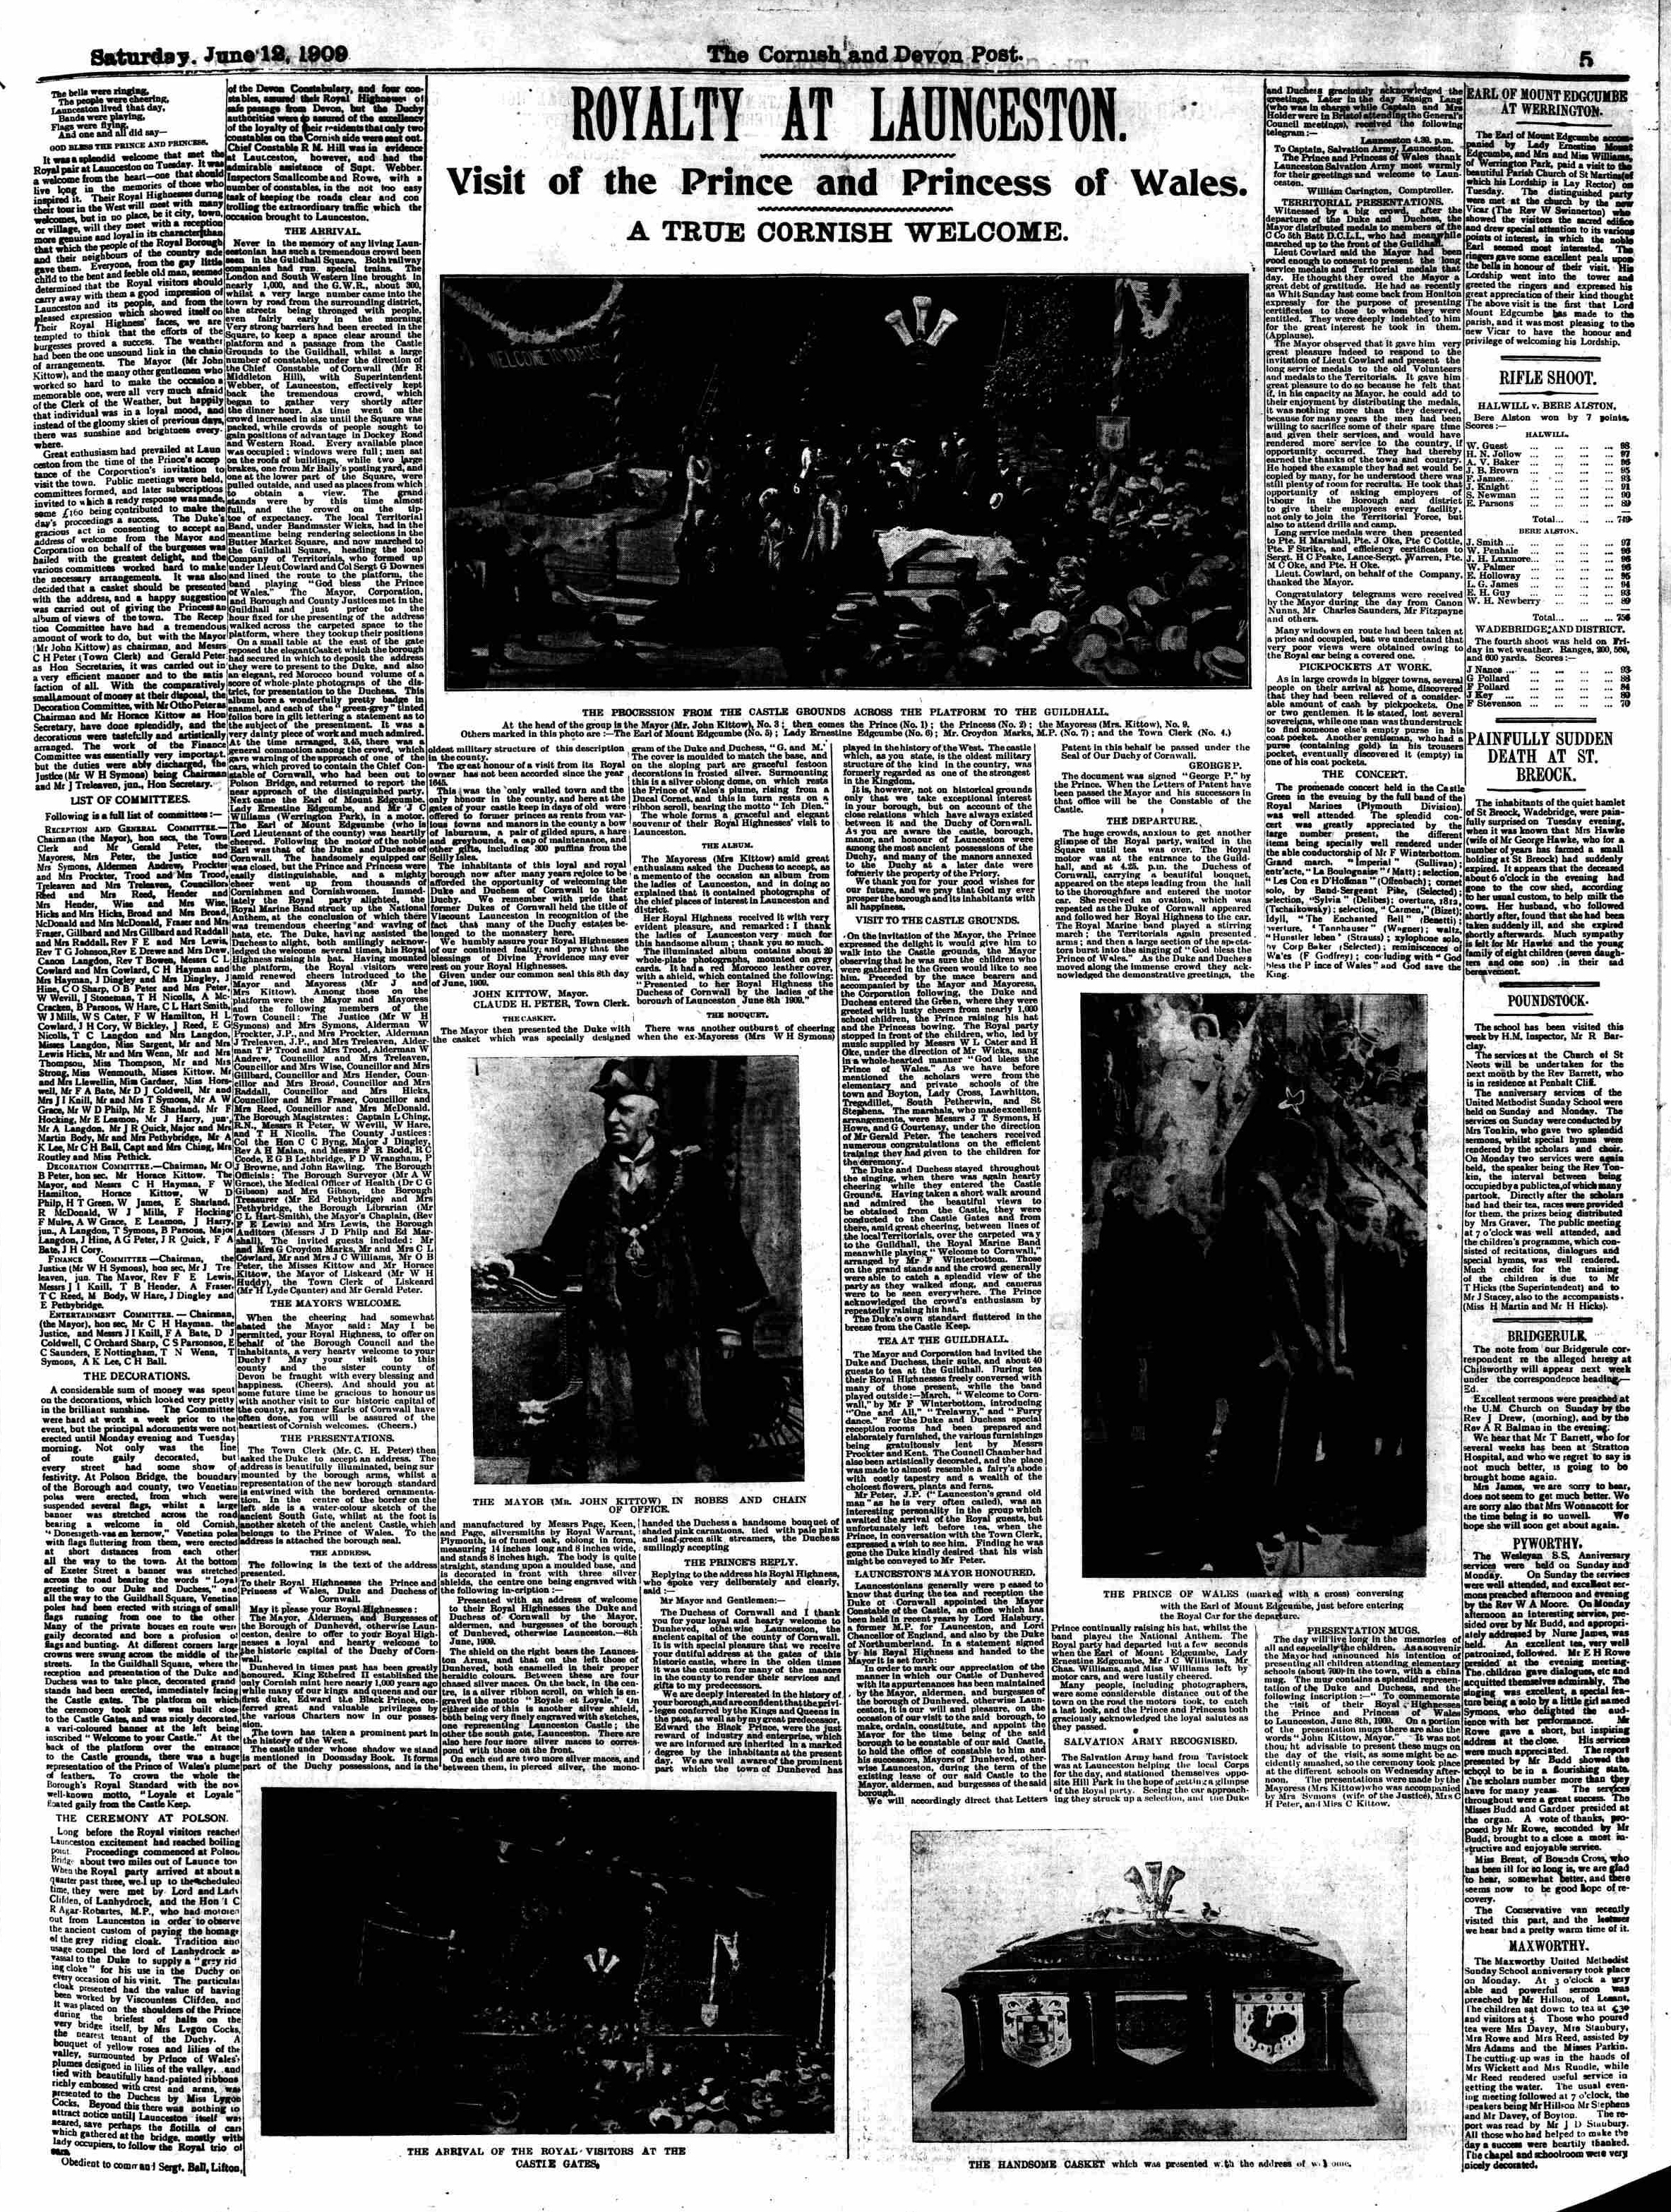 Cornish & Devon Post 12 June 1909